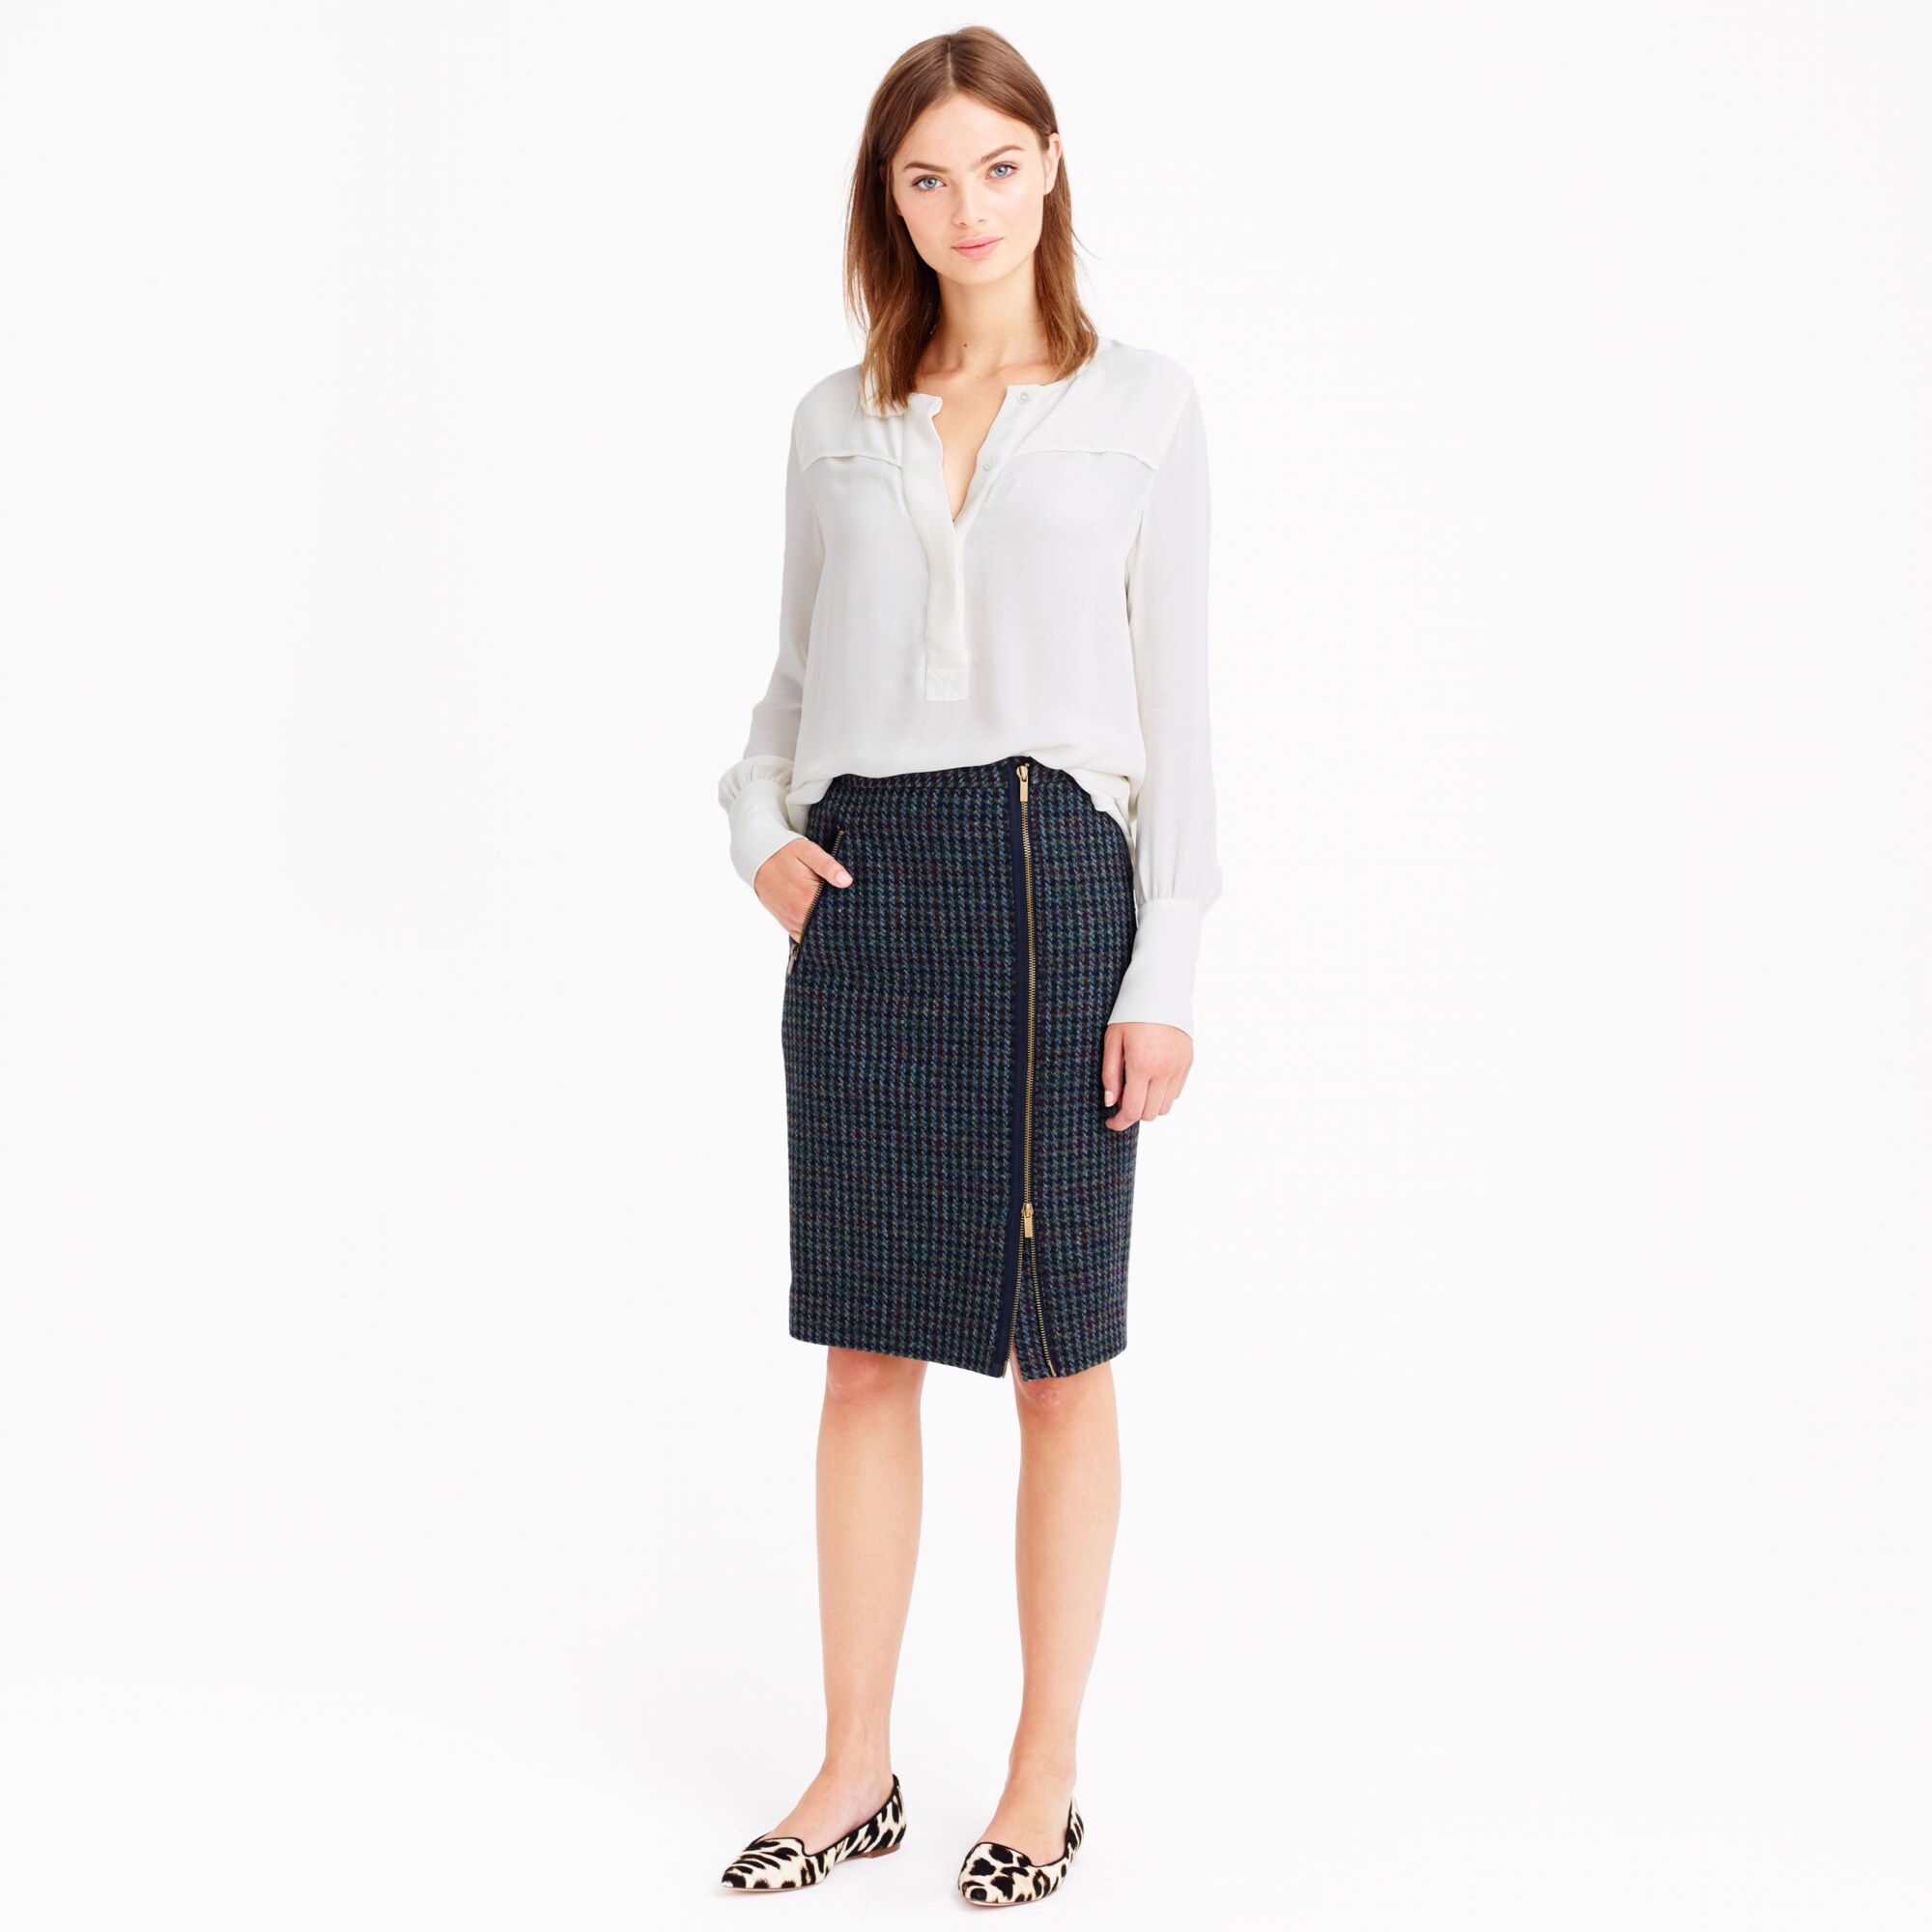 J.Crew: Asymmetrical zip pencil skirt in houndstooth